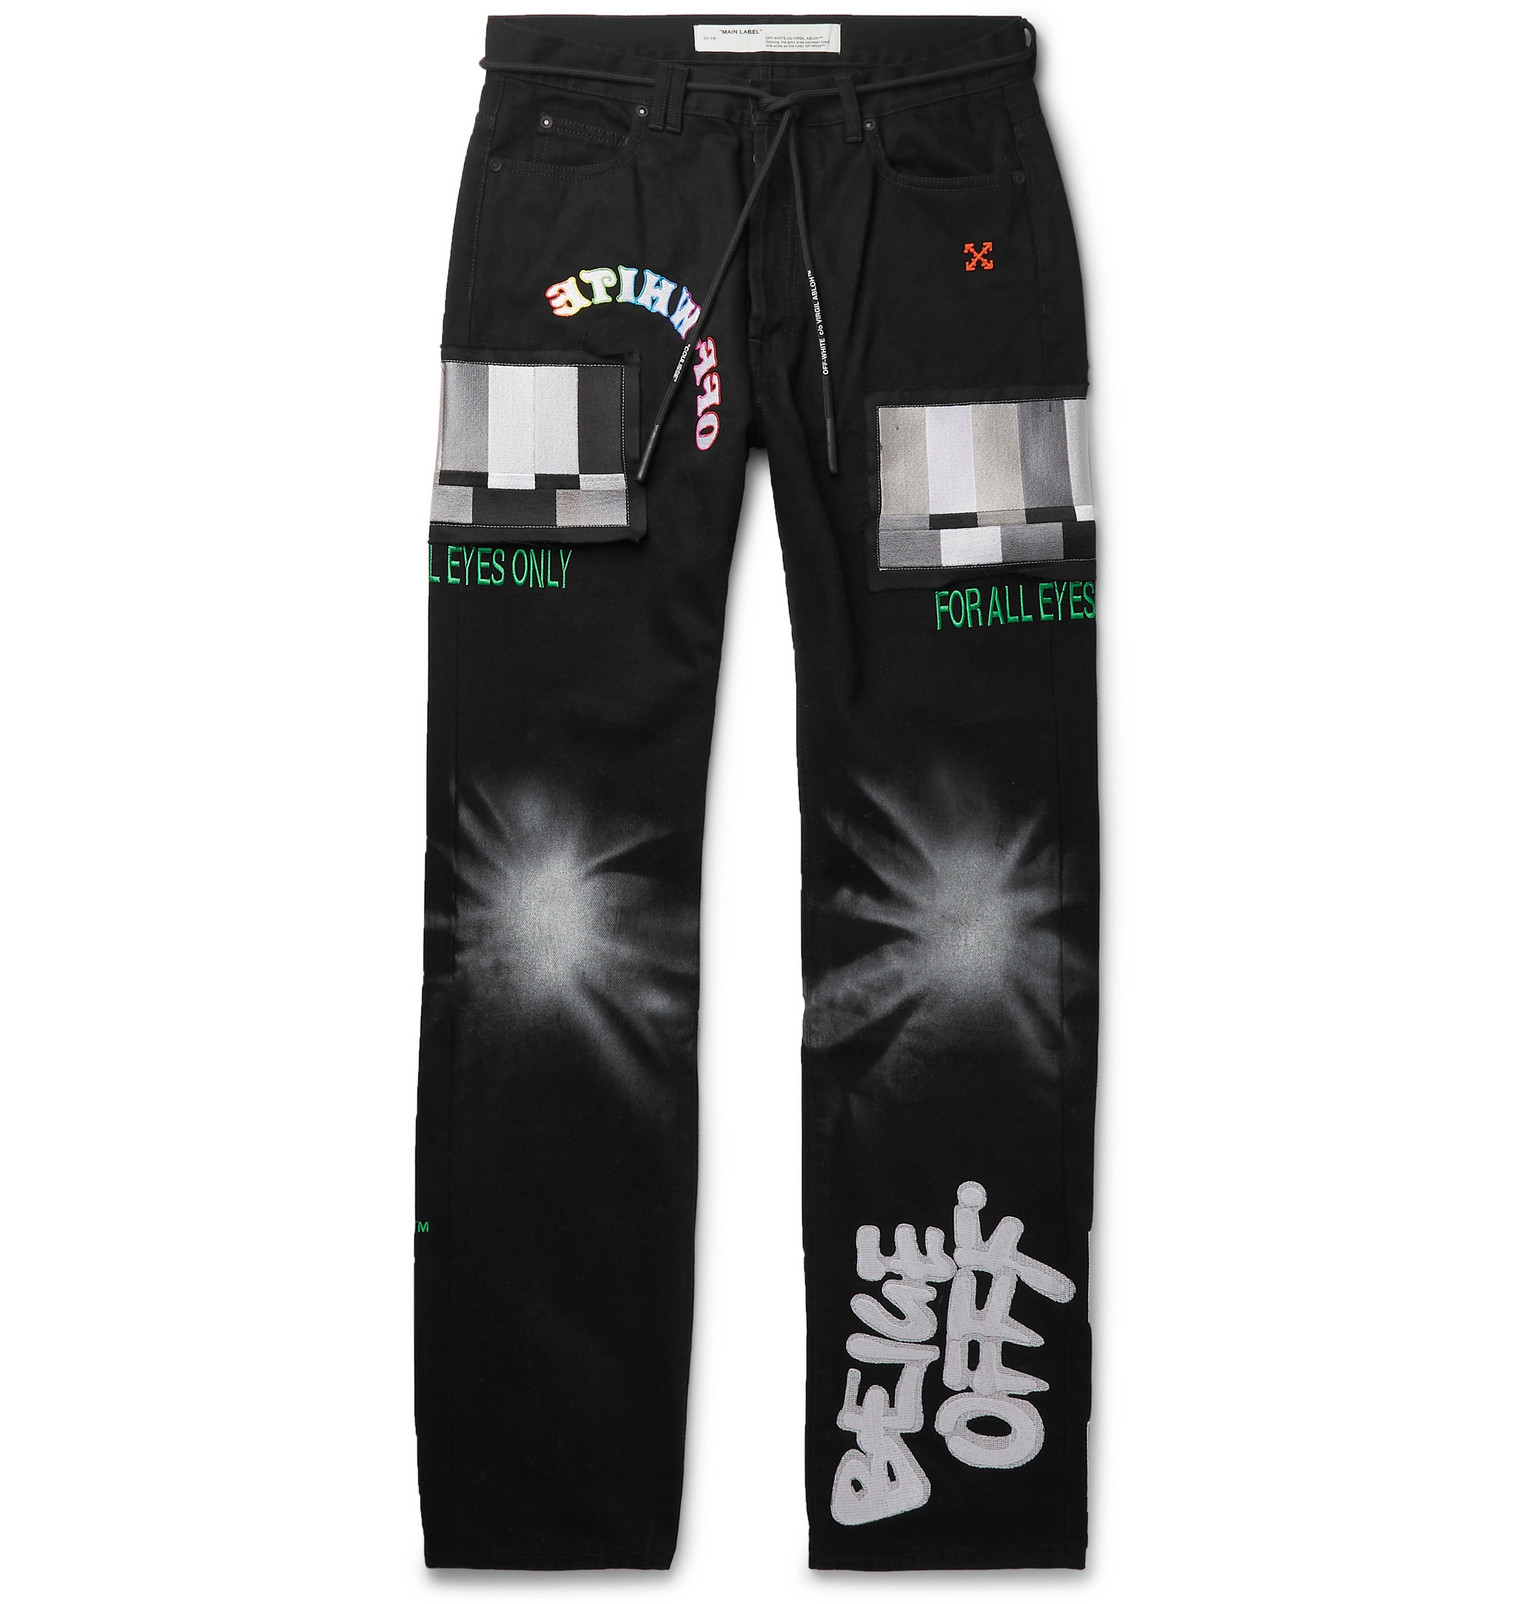 OFF-WHITE x Ev Bravado 5 Pocket Denim Jeans Black - FW19 メンズ - JP